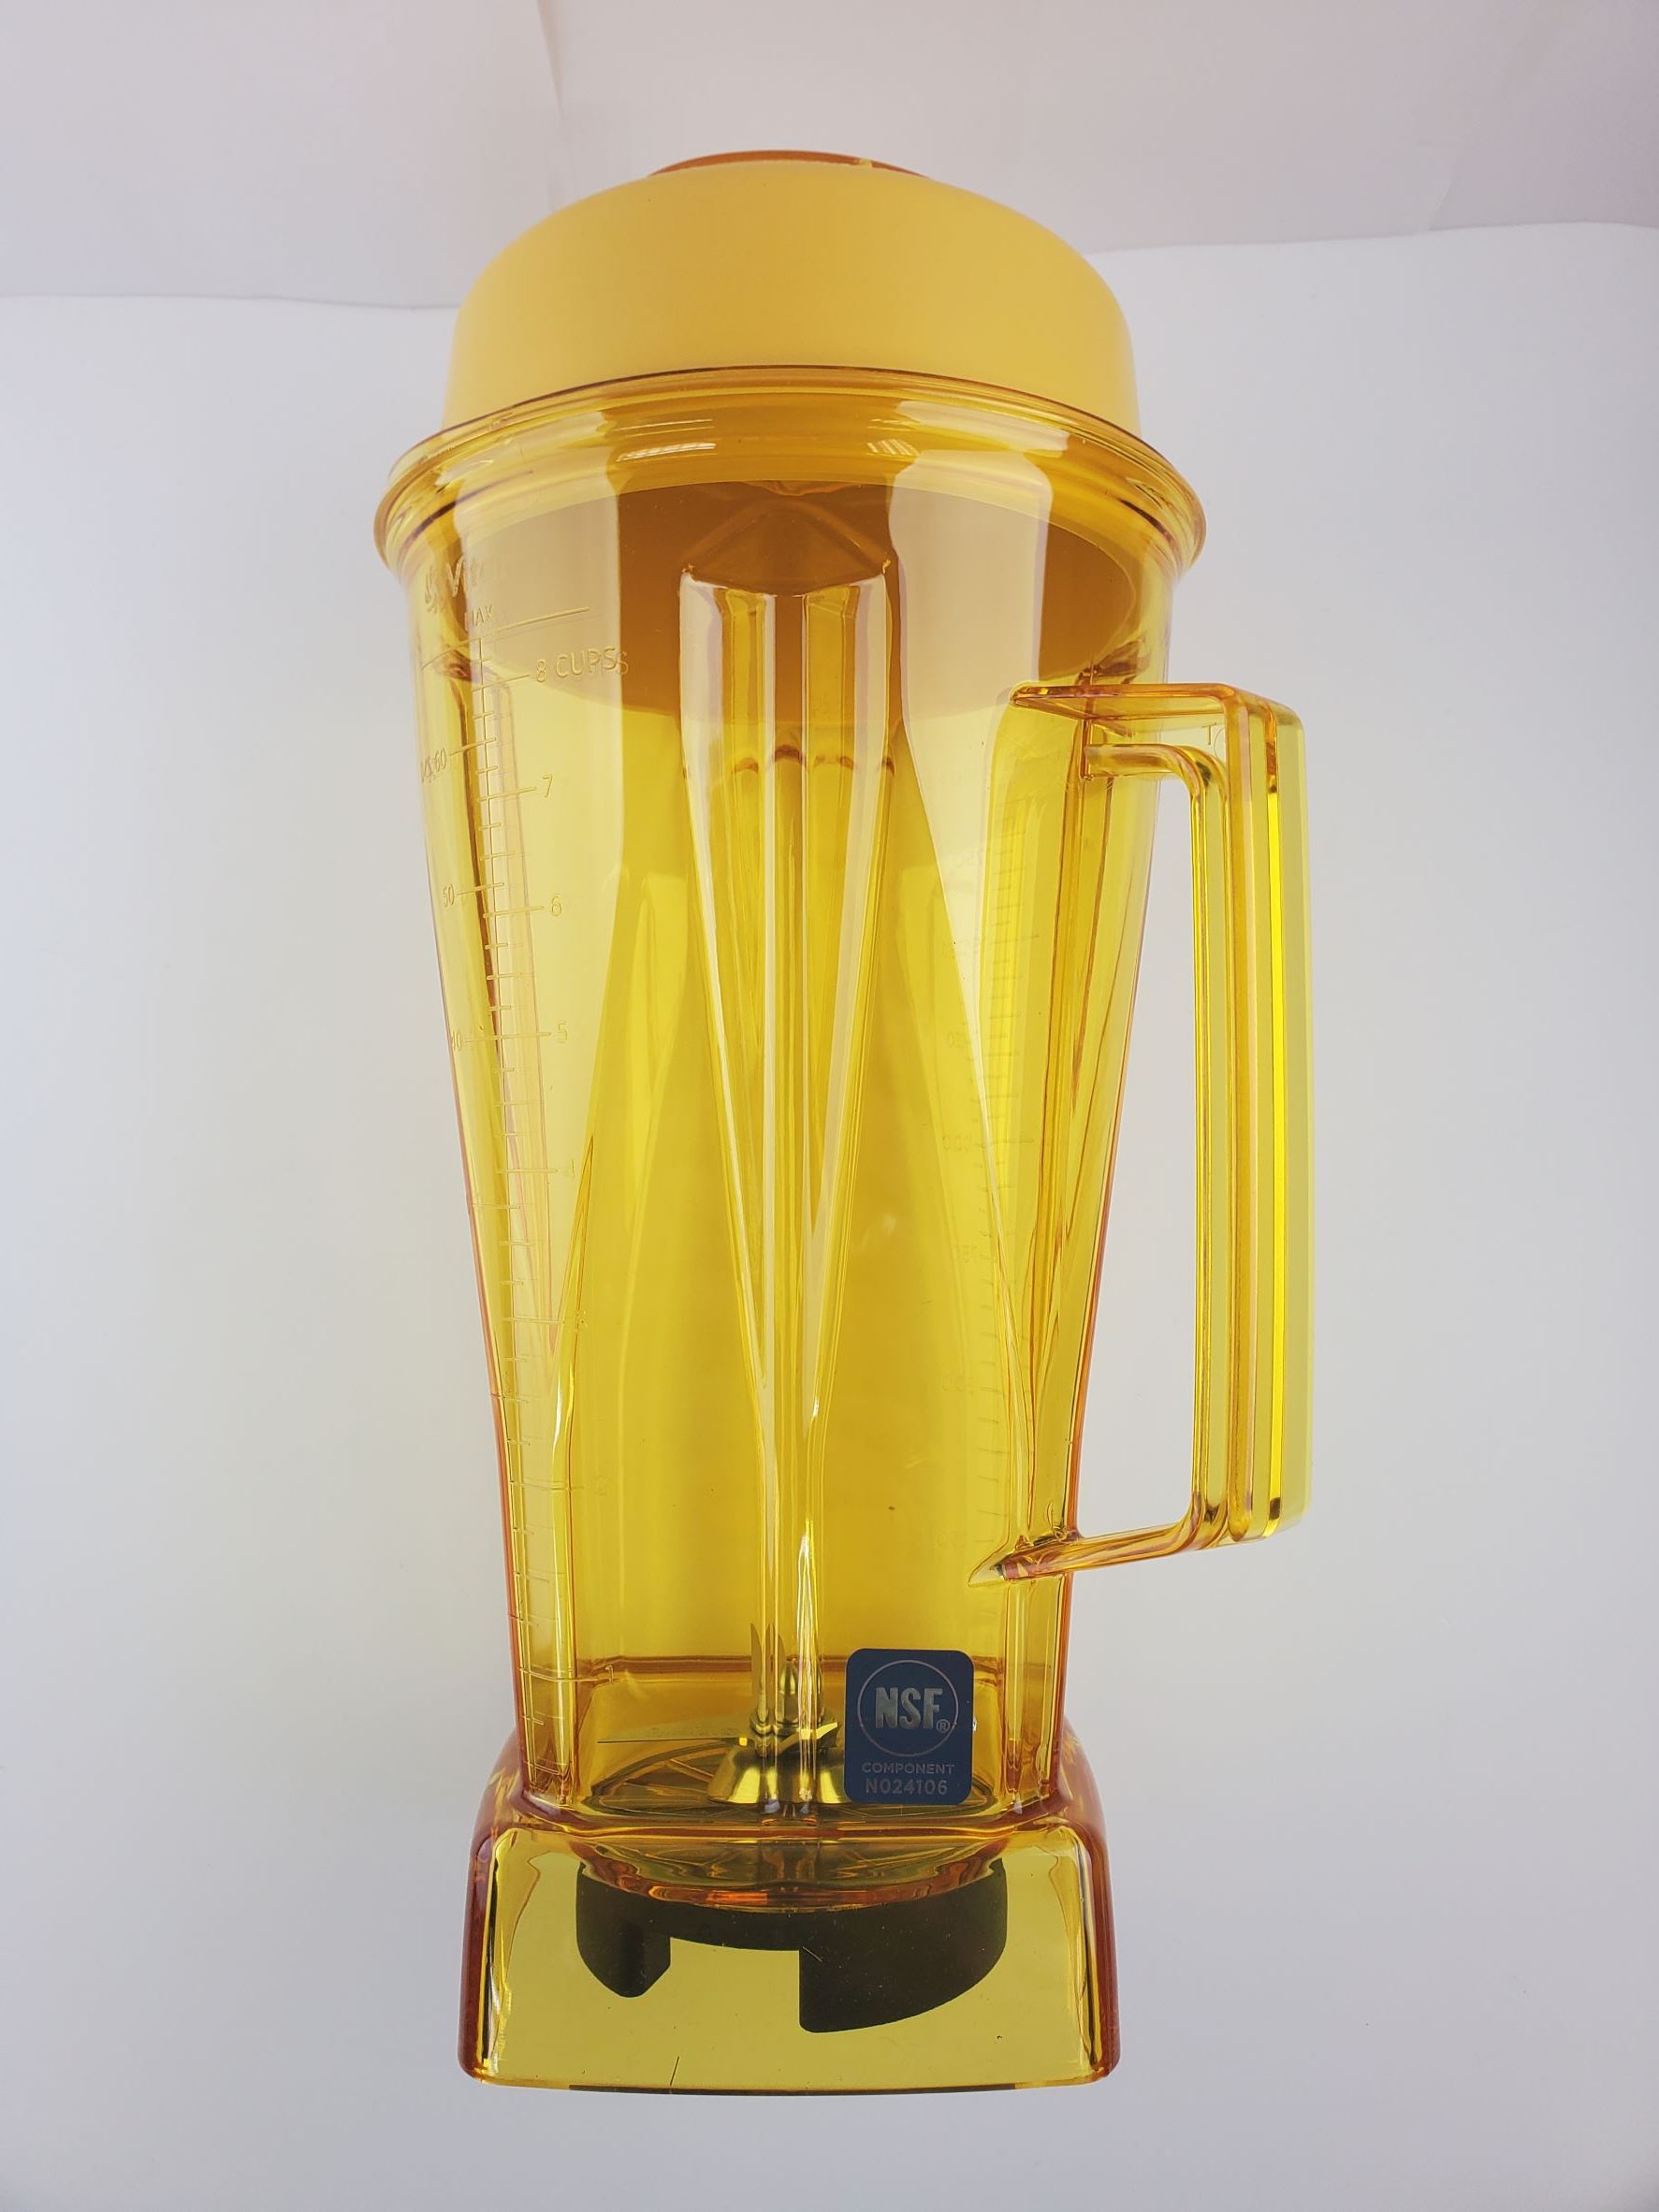 64 oz Container / Blender Jar with Wet Blade & Lid, Vitamix